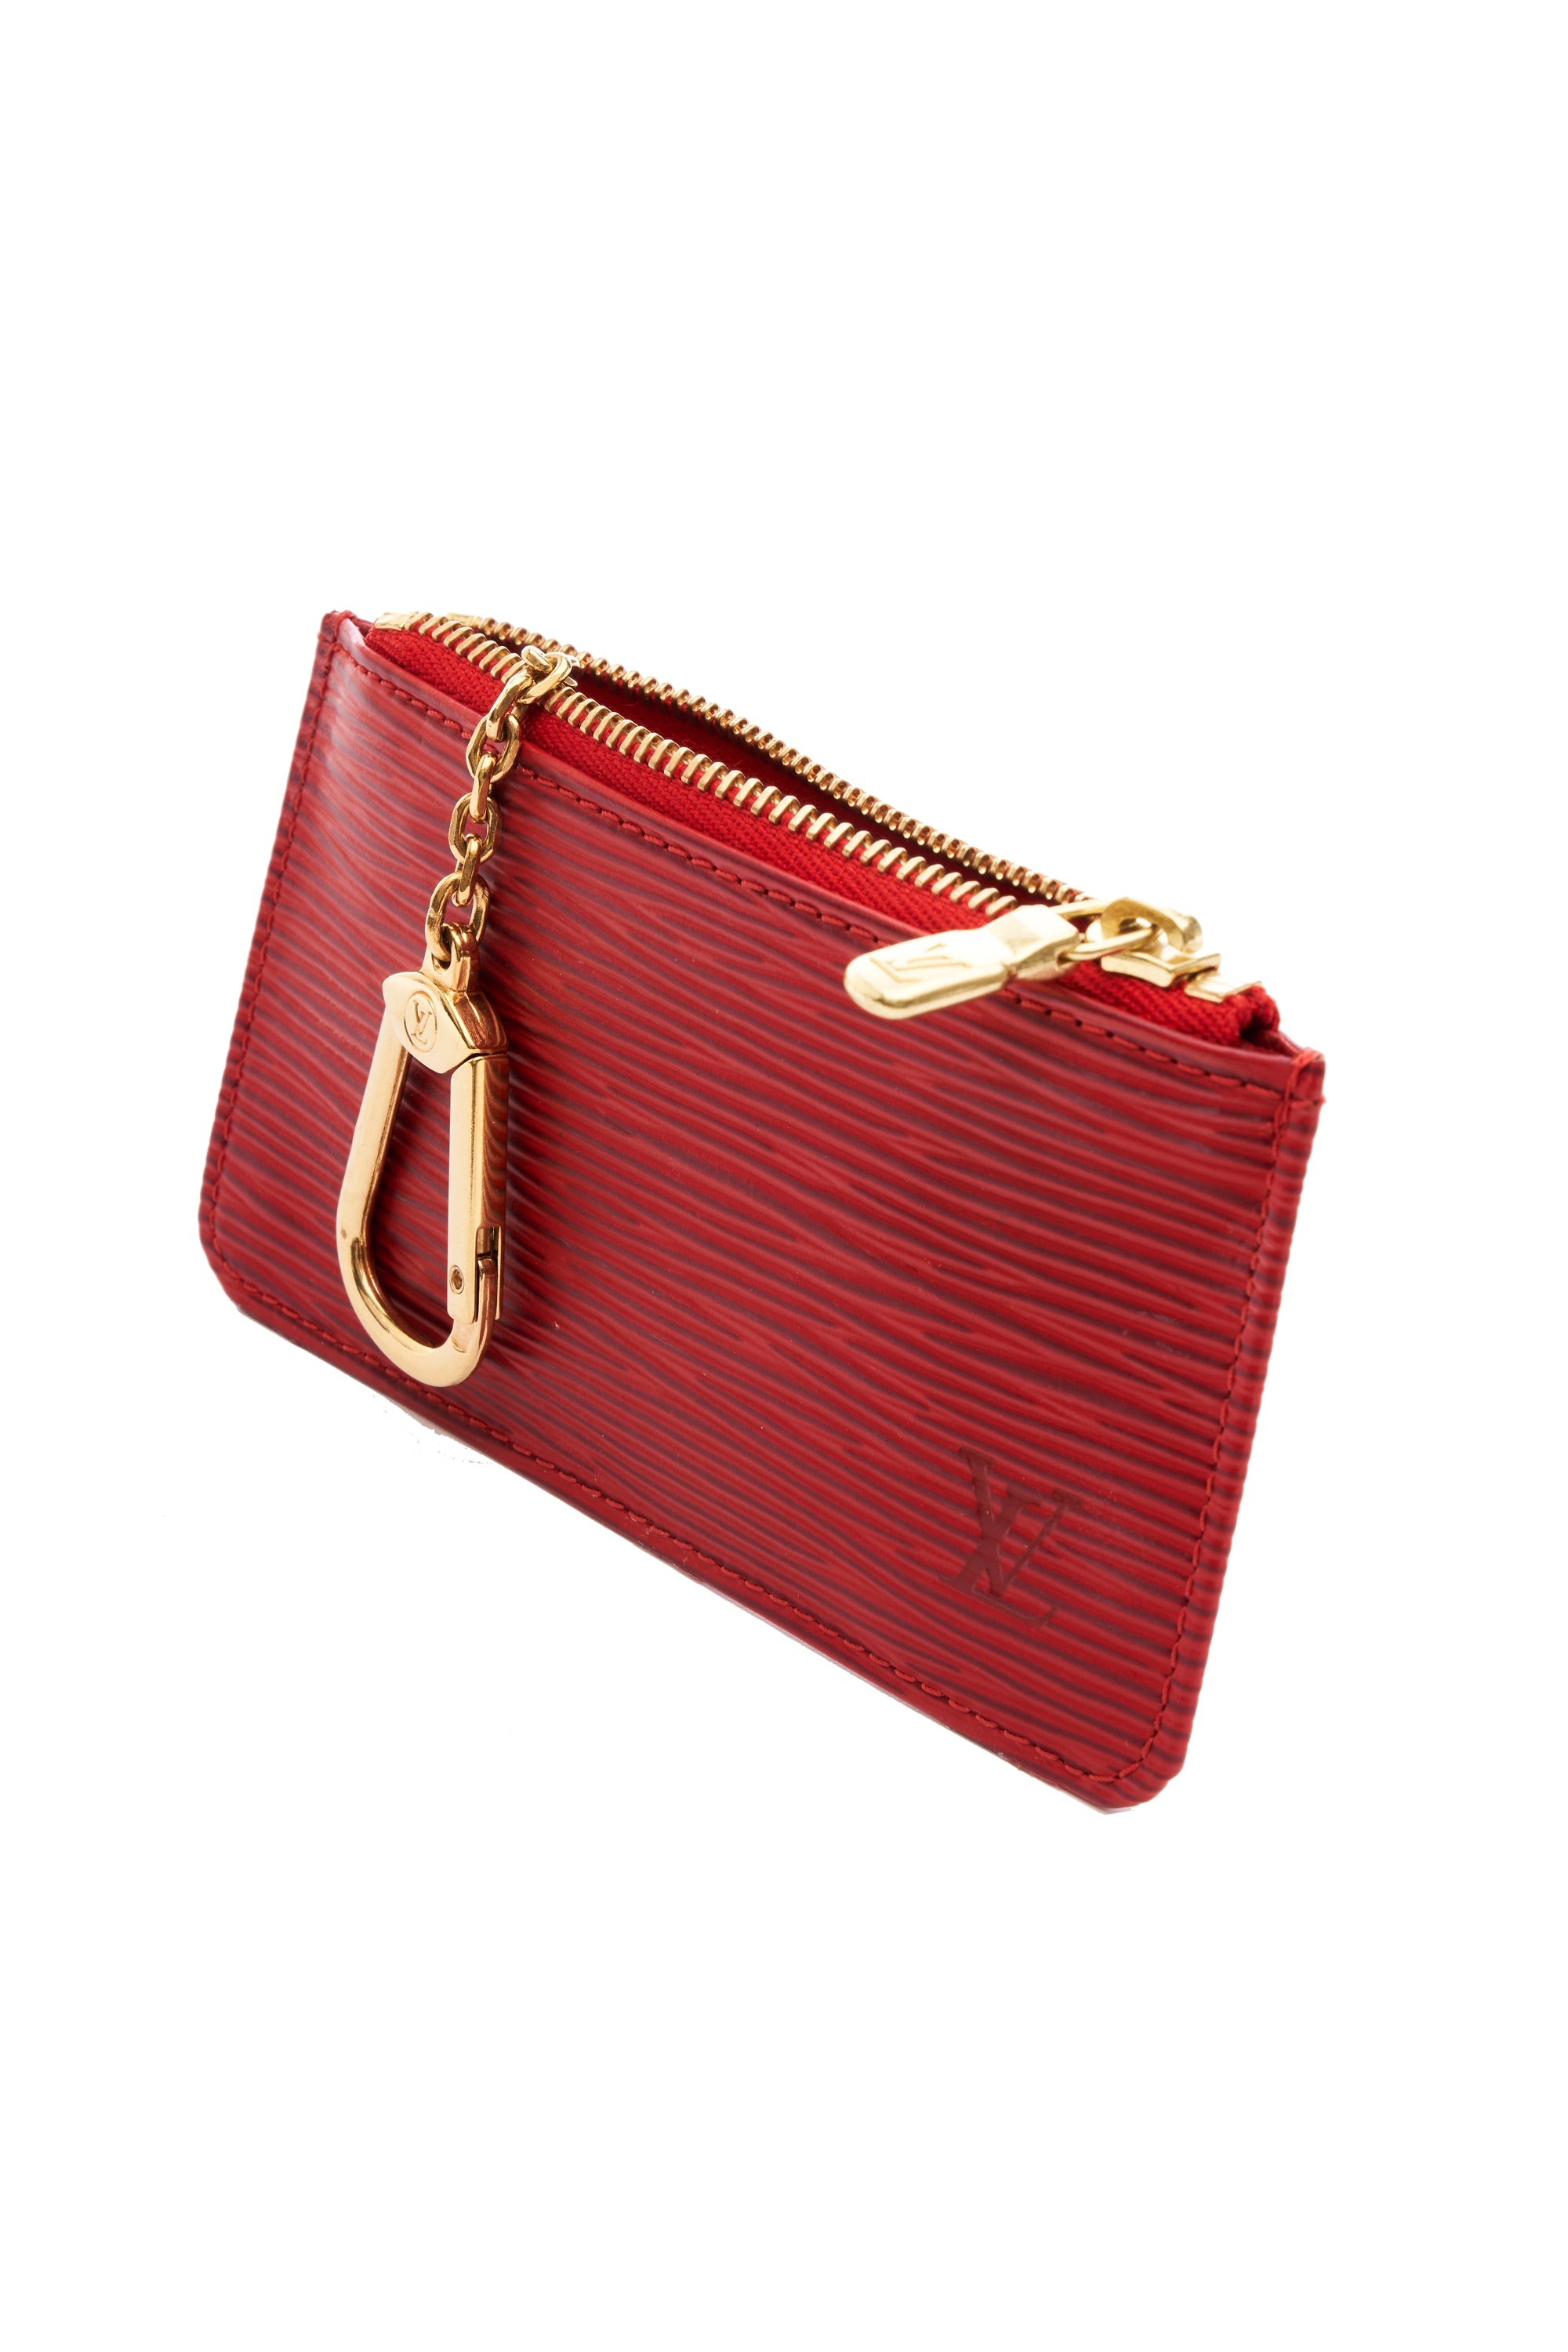 Louis Vuitton Red Epi Leather Mini Key Pouch